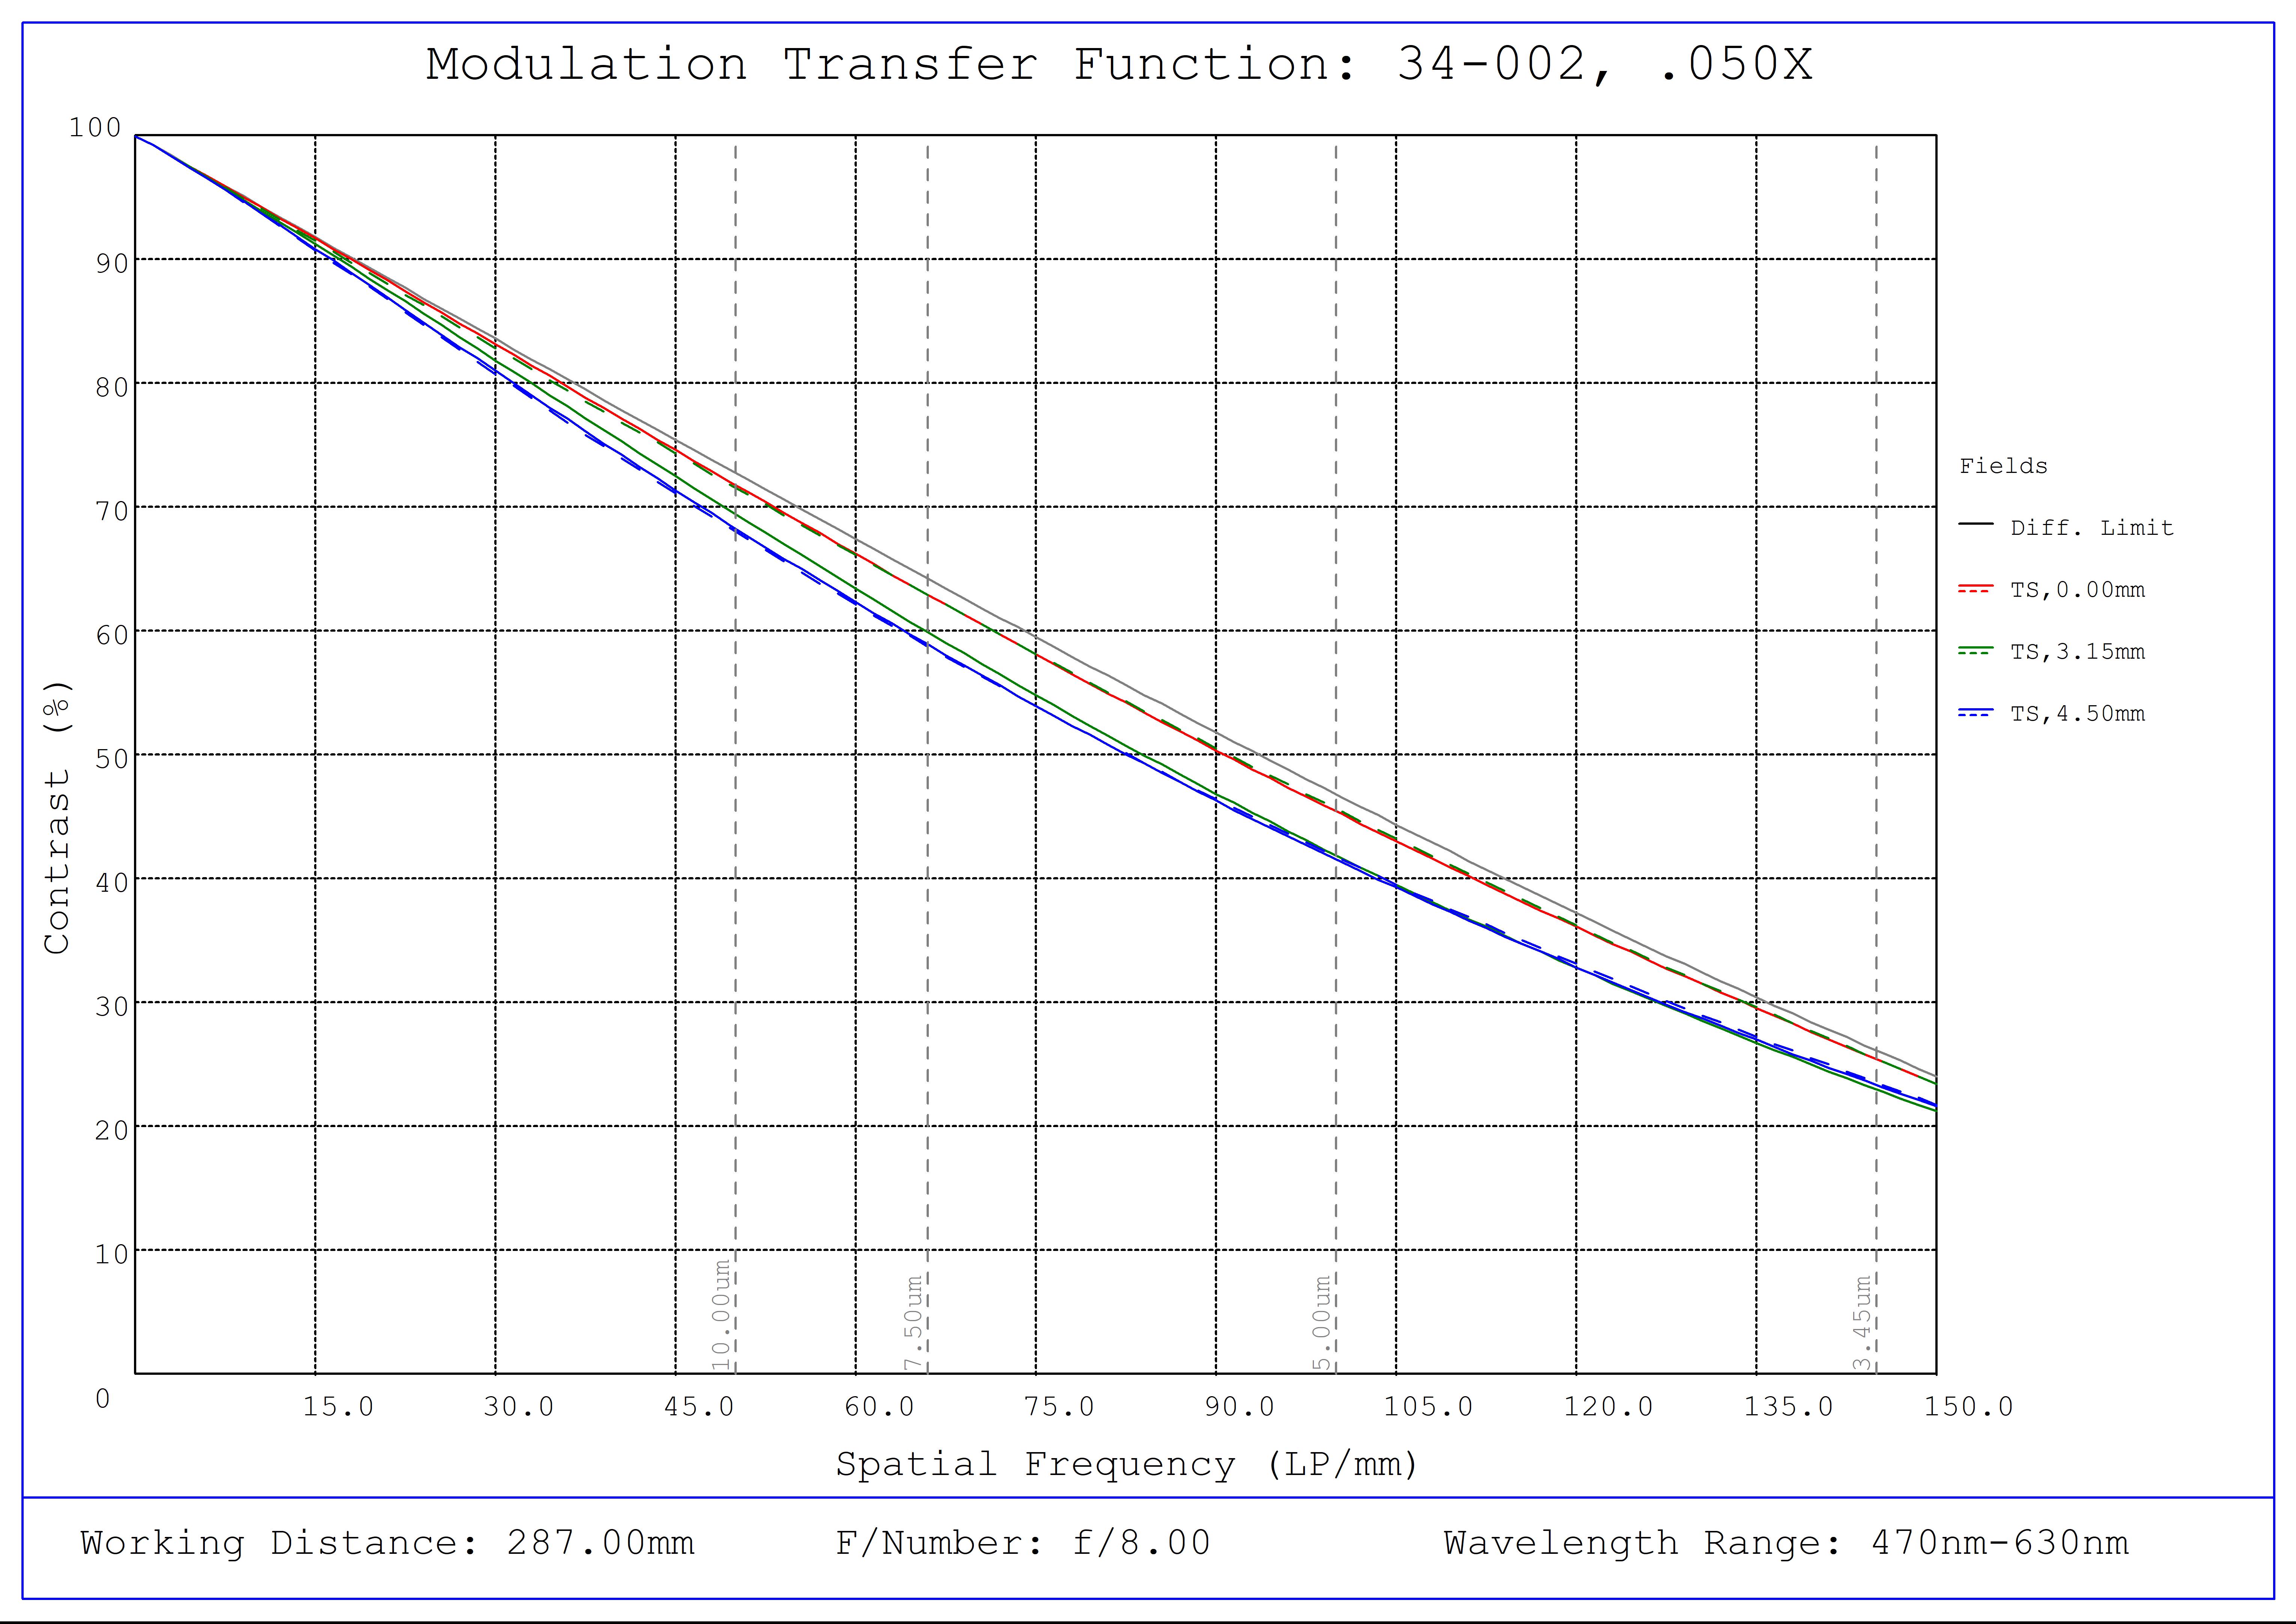 #34-002, 0.050X, 1/1.8" C-Mount TitanTL® Telecentric Lens, Modulated Transfer Function (MTF) Plot, 287mm Working Distance, f8